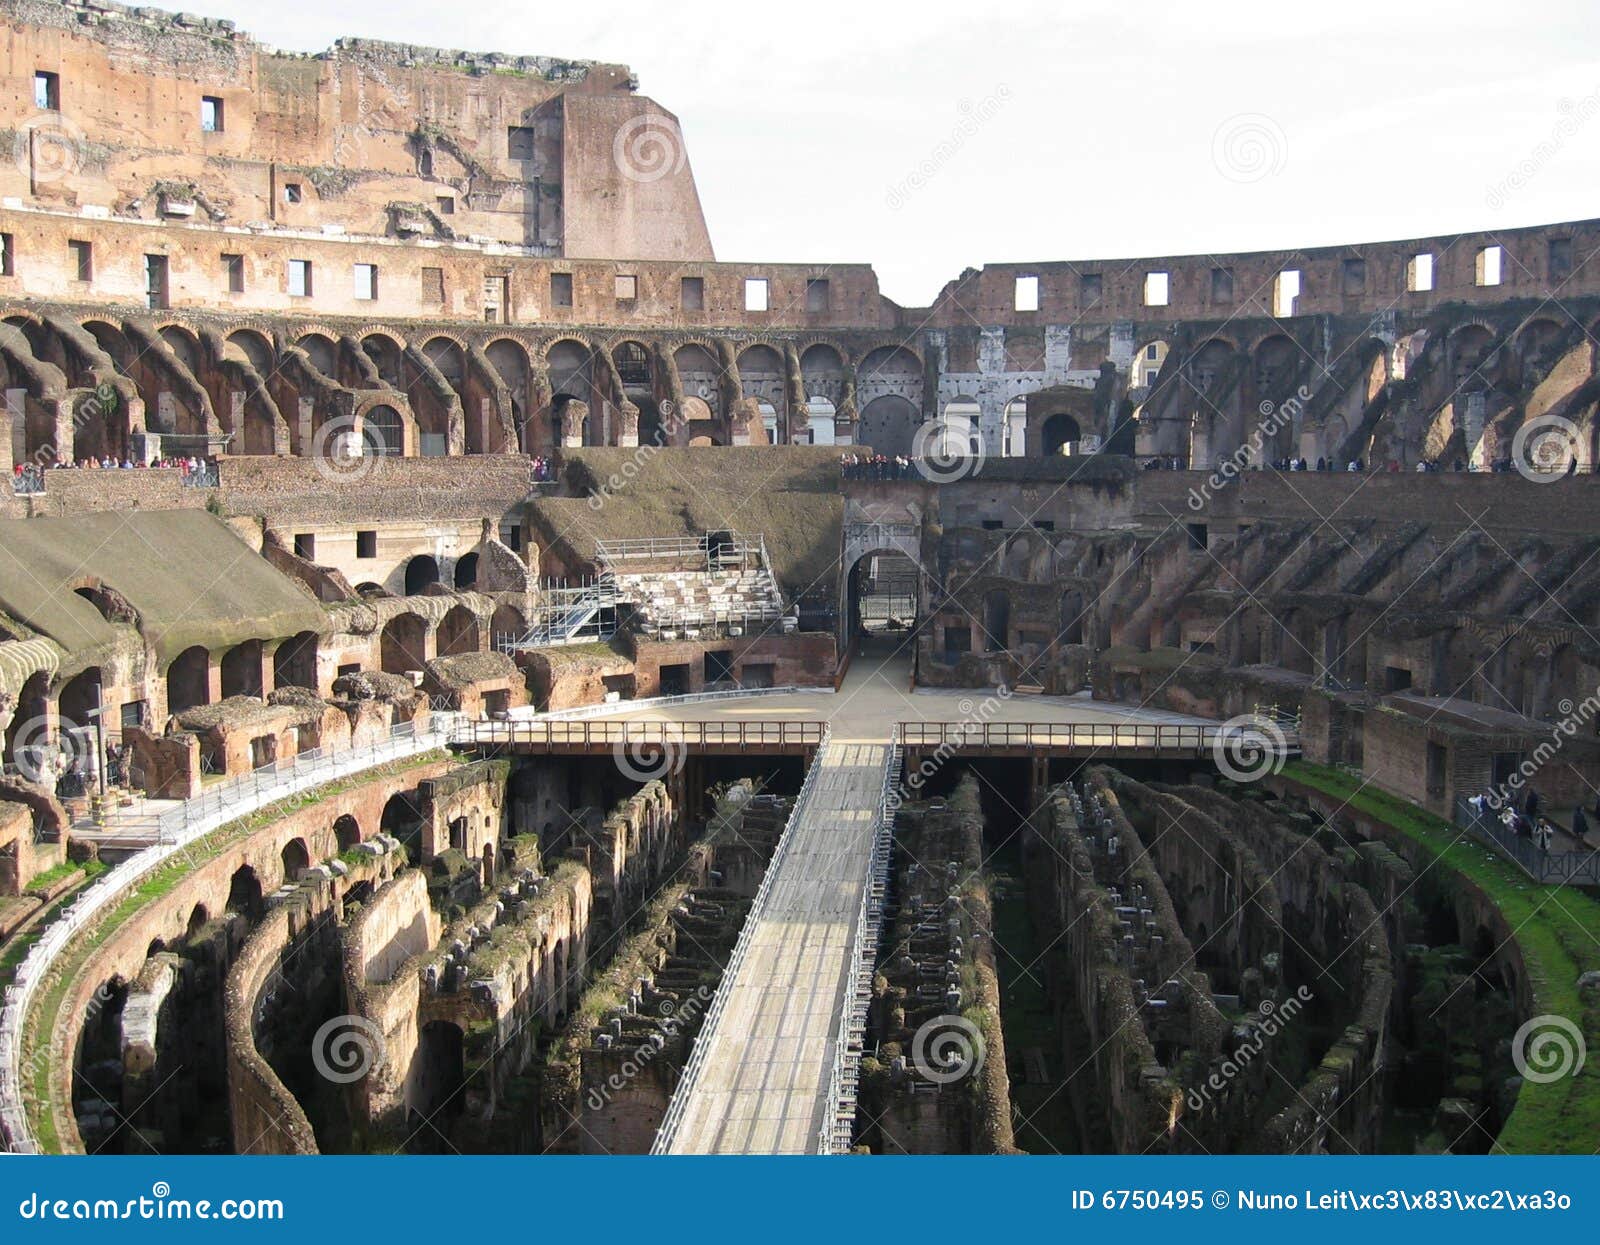 inside roman colosseum rome